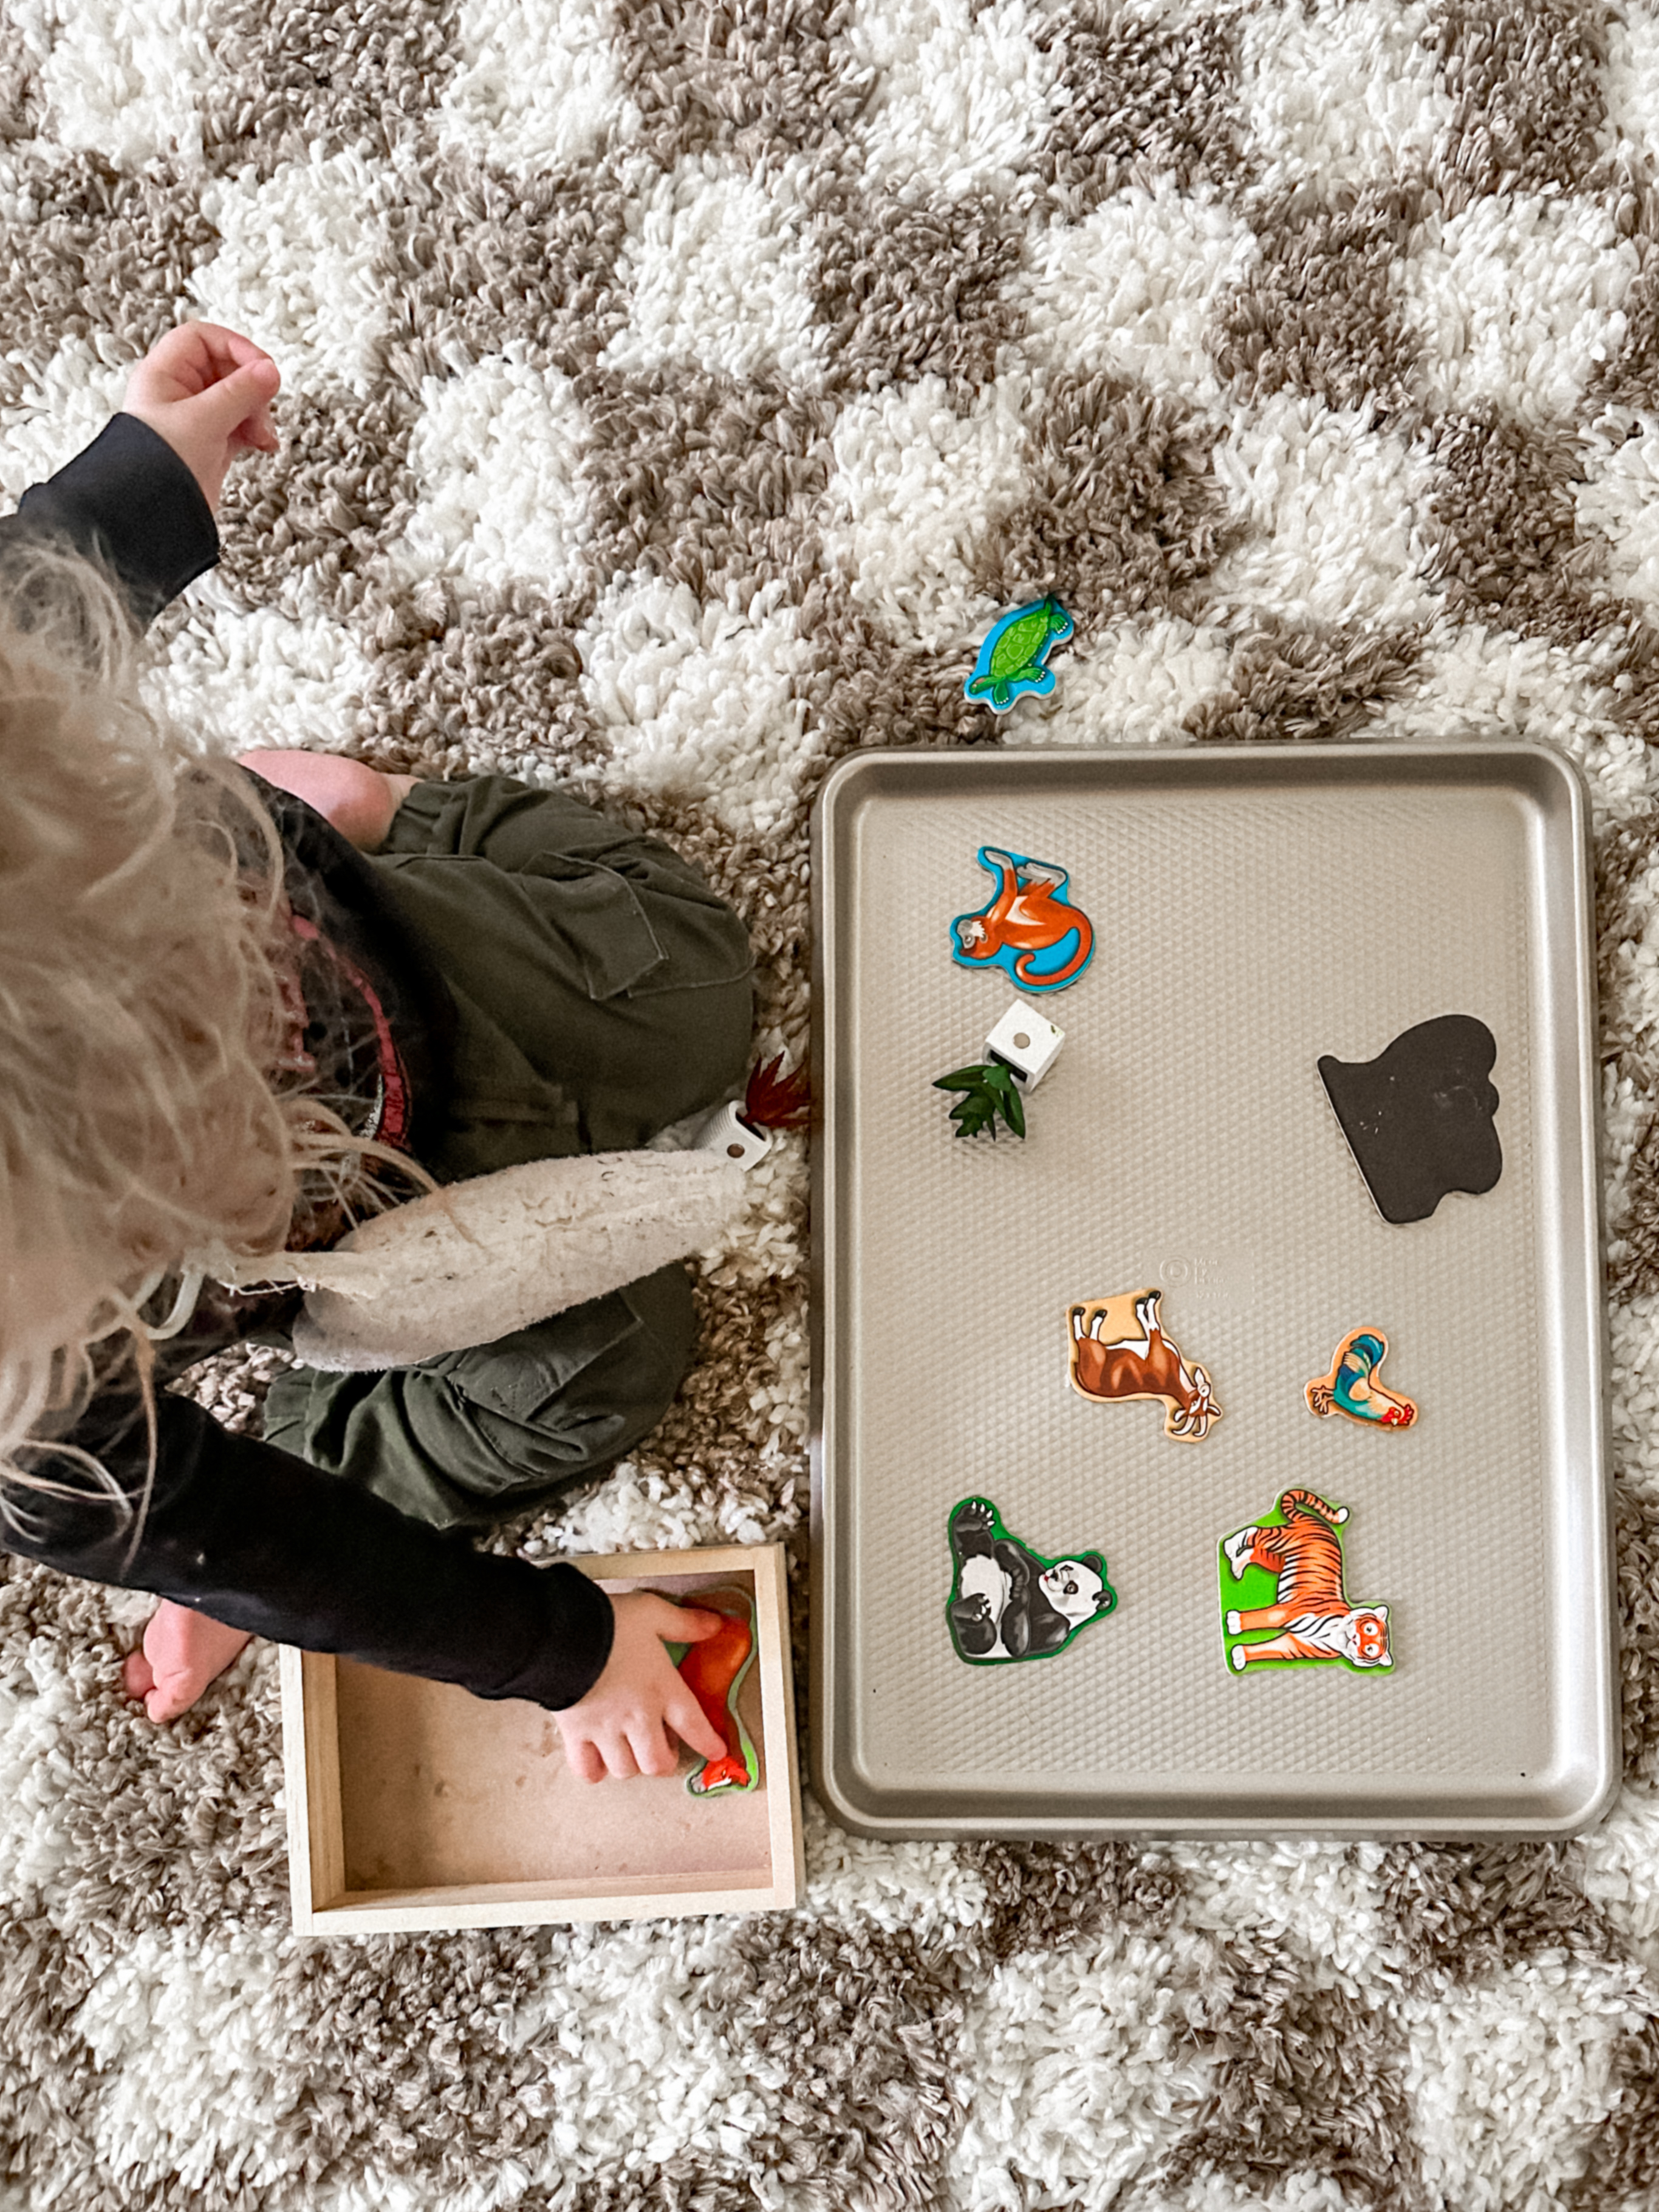 Sensory Play Activity: Magnetic Baking Sheet Toddler playing with magnetics on baking sheet.